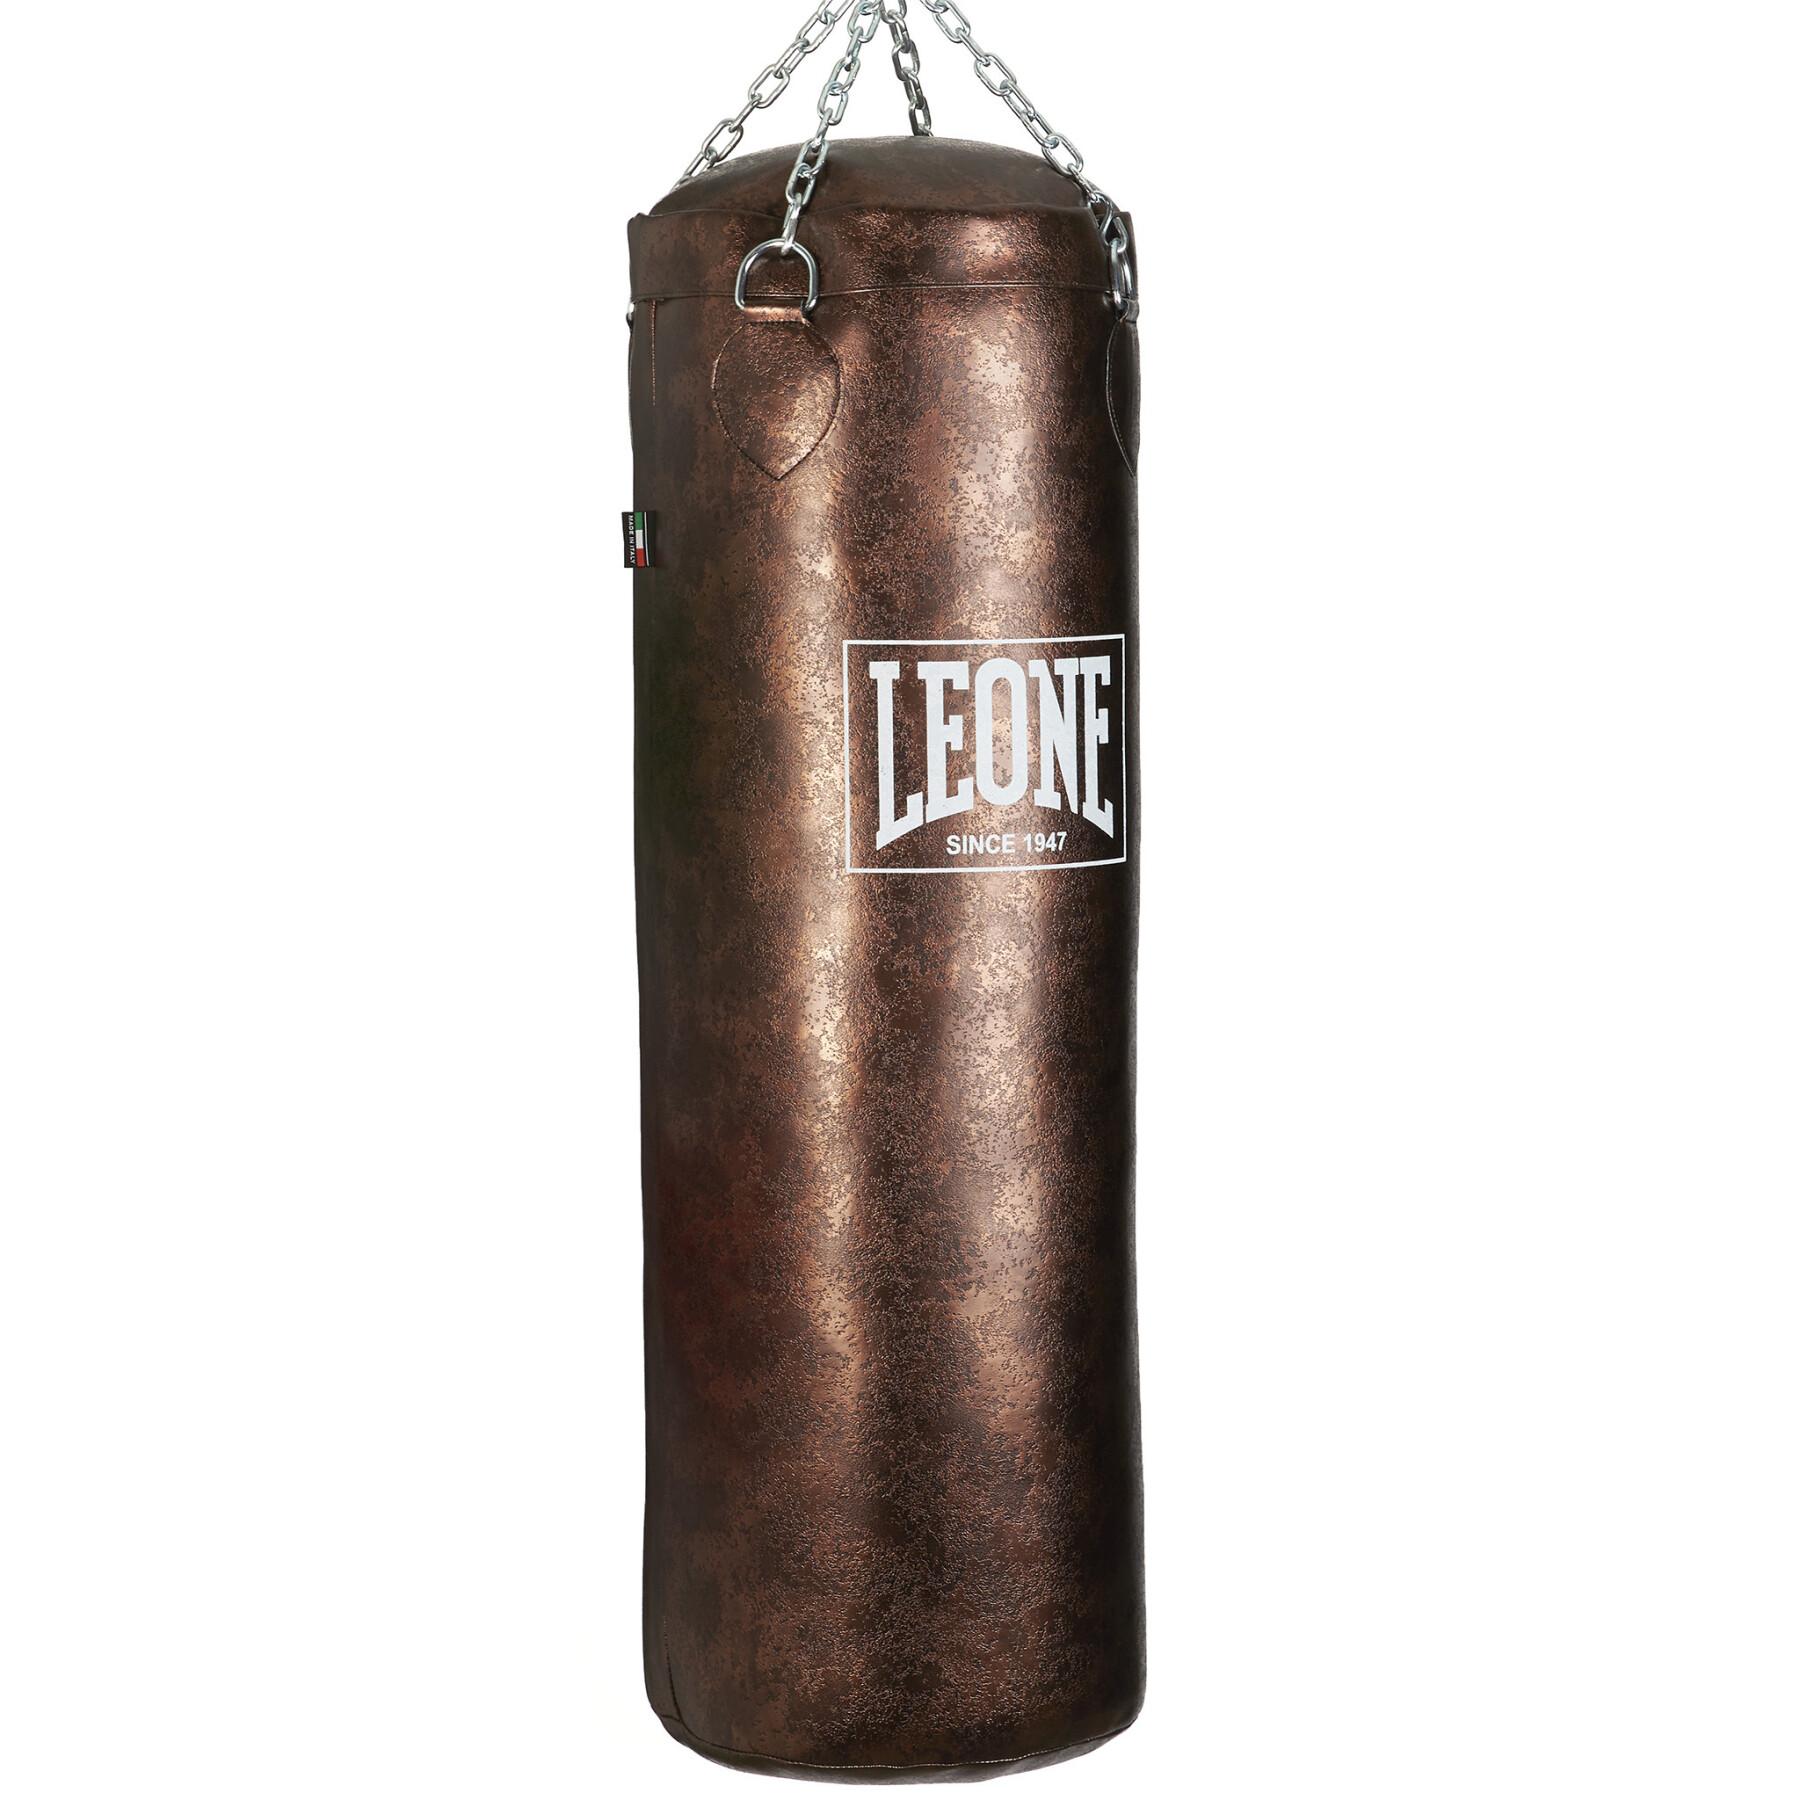 Saco de boxeo Leone vintage bronzo